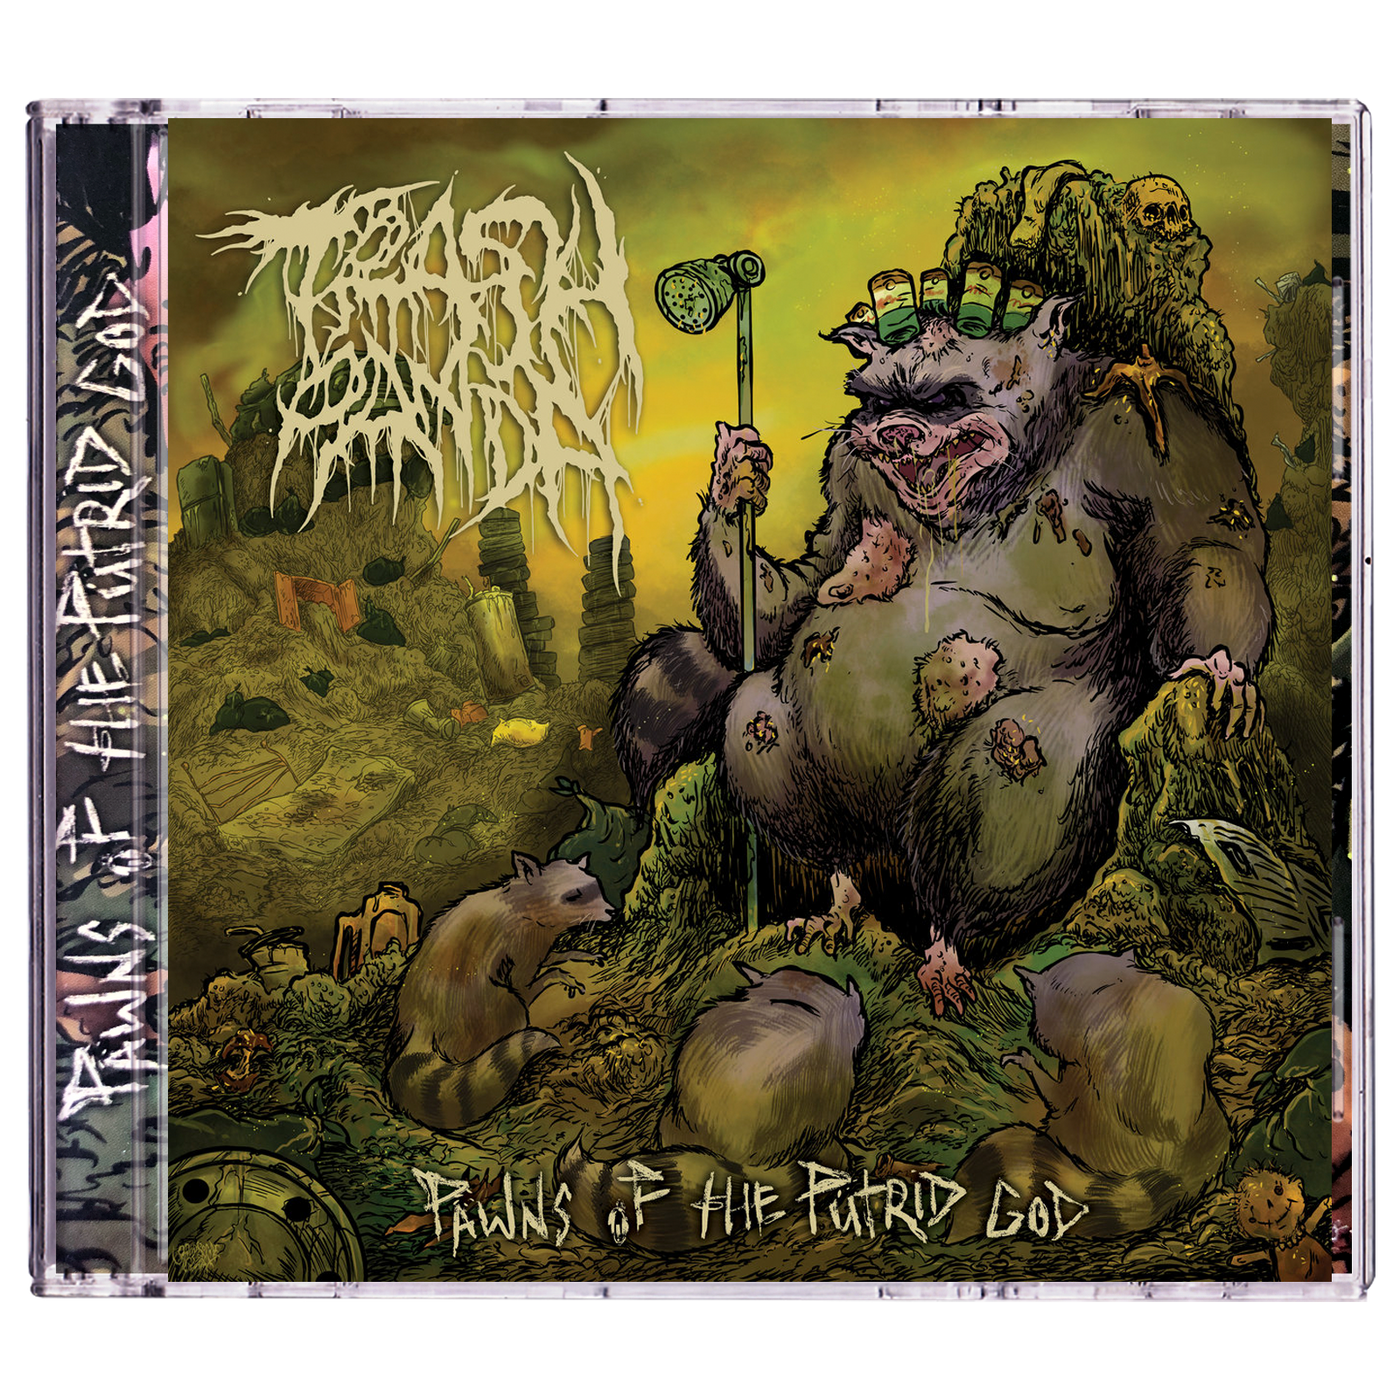 Trash Panda 'Pawns of the Putrid God' CD